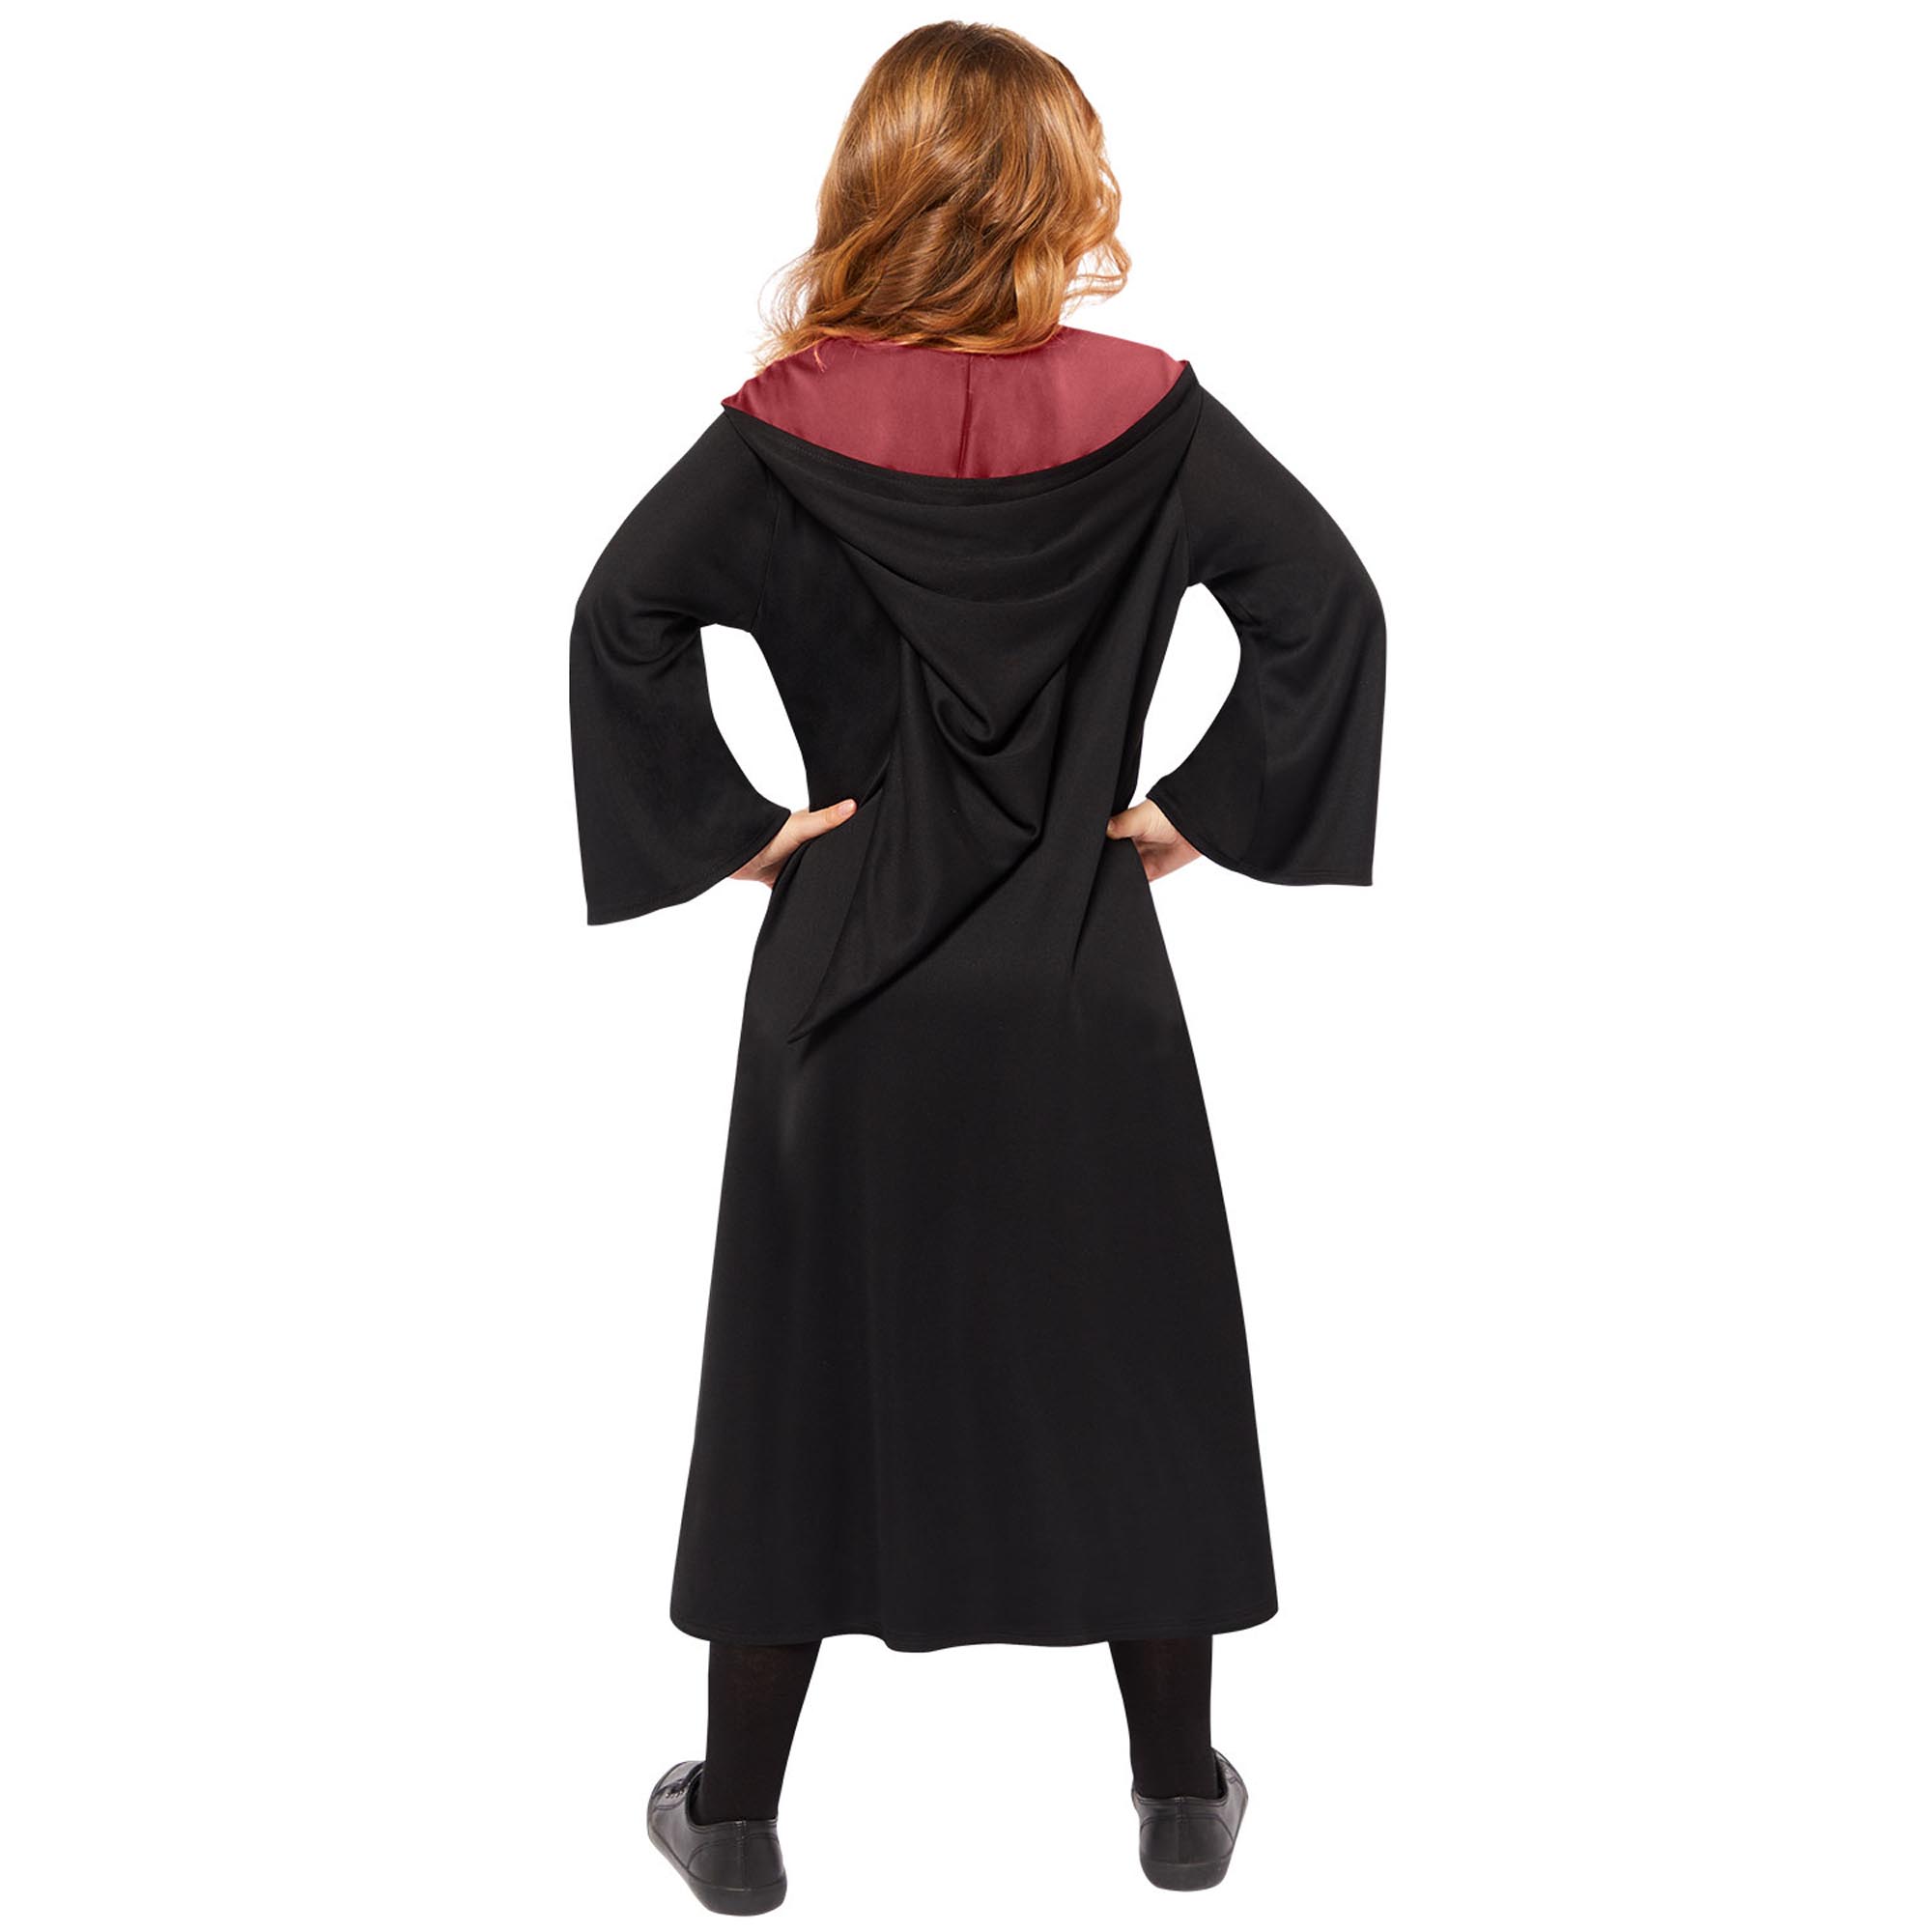 Official Hermione Granger Robe Children's Fancy Dress Costume